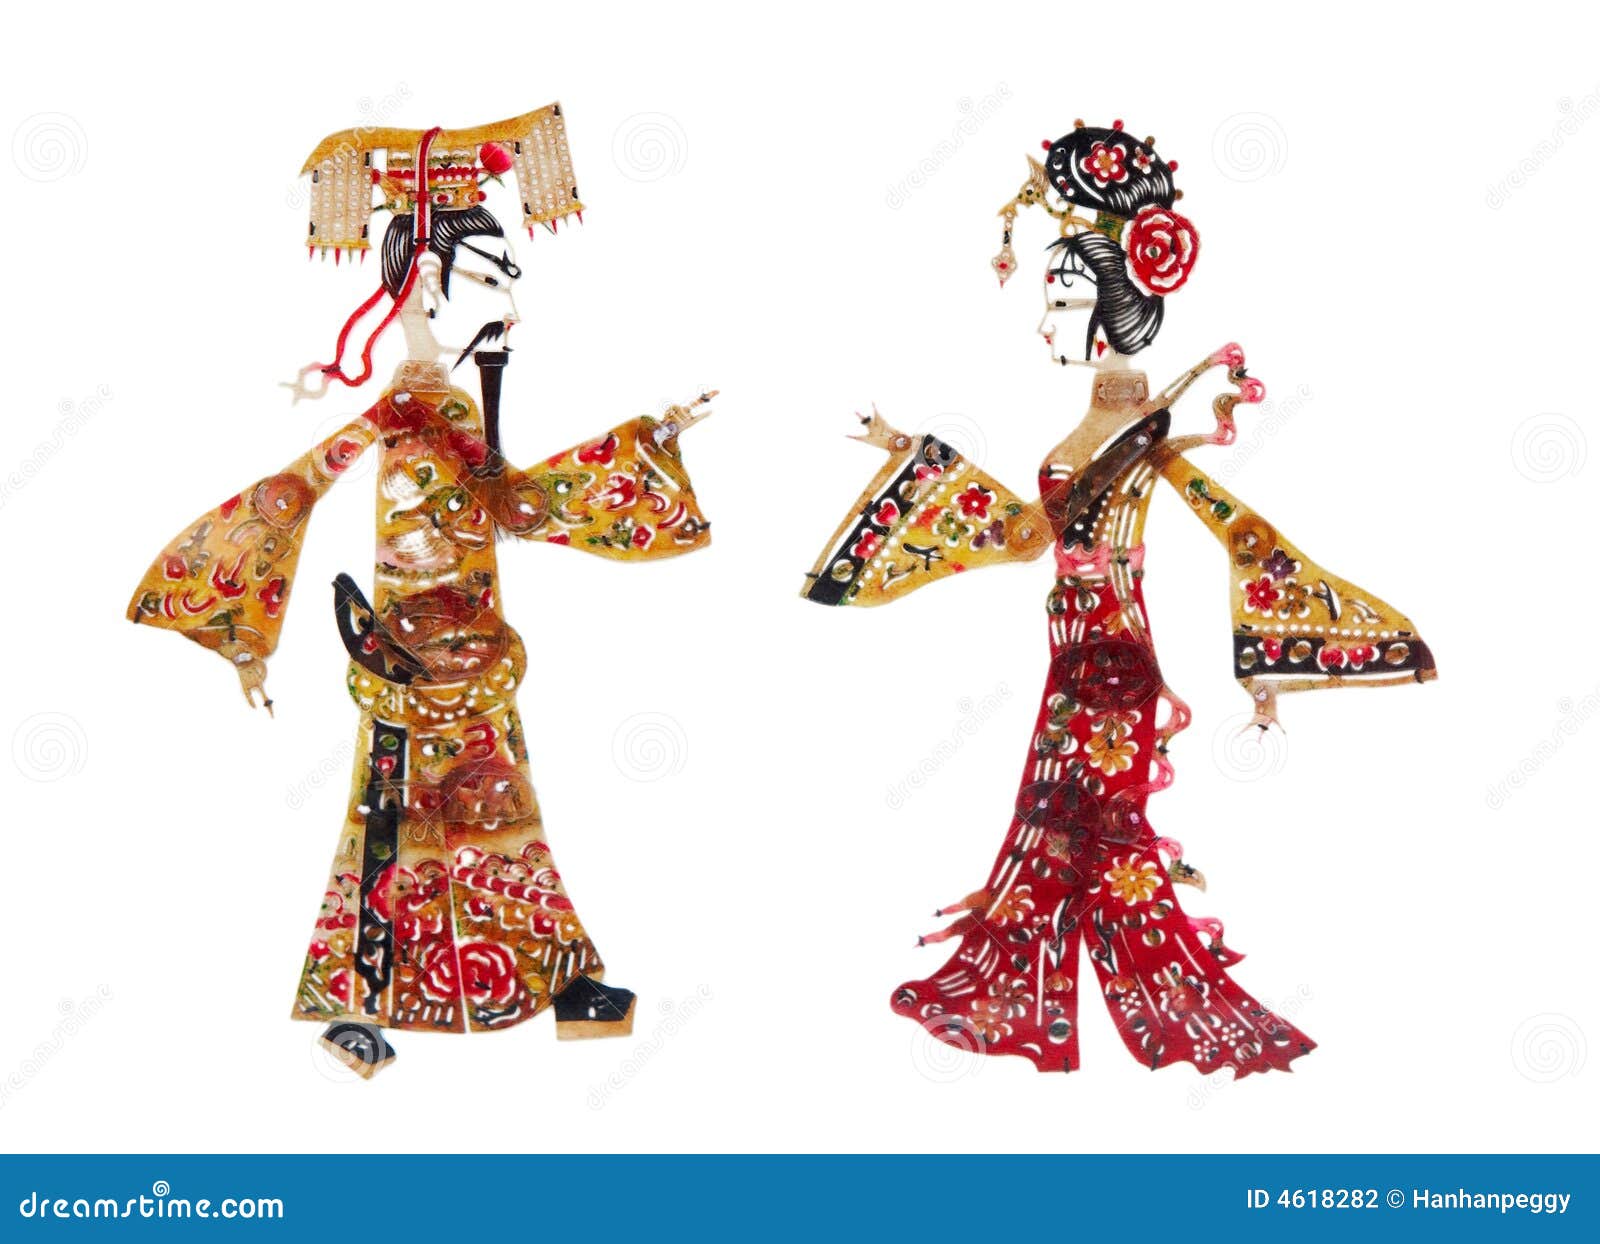 Chinese Paper Cut Royalty-Free Stock Image | CartoonDealer.com #46182821300 x 1027